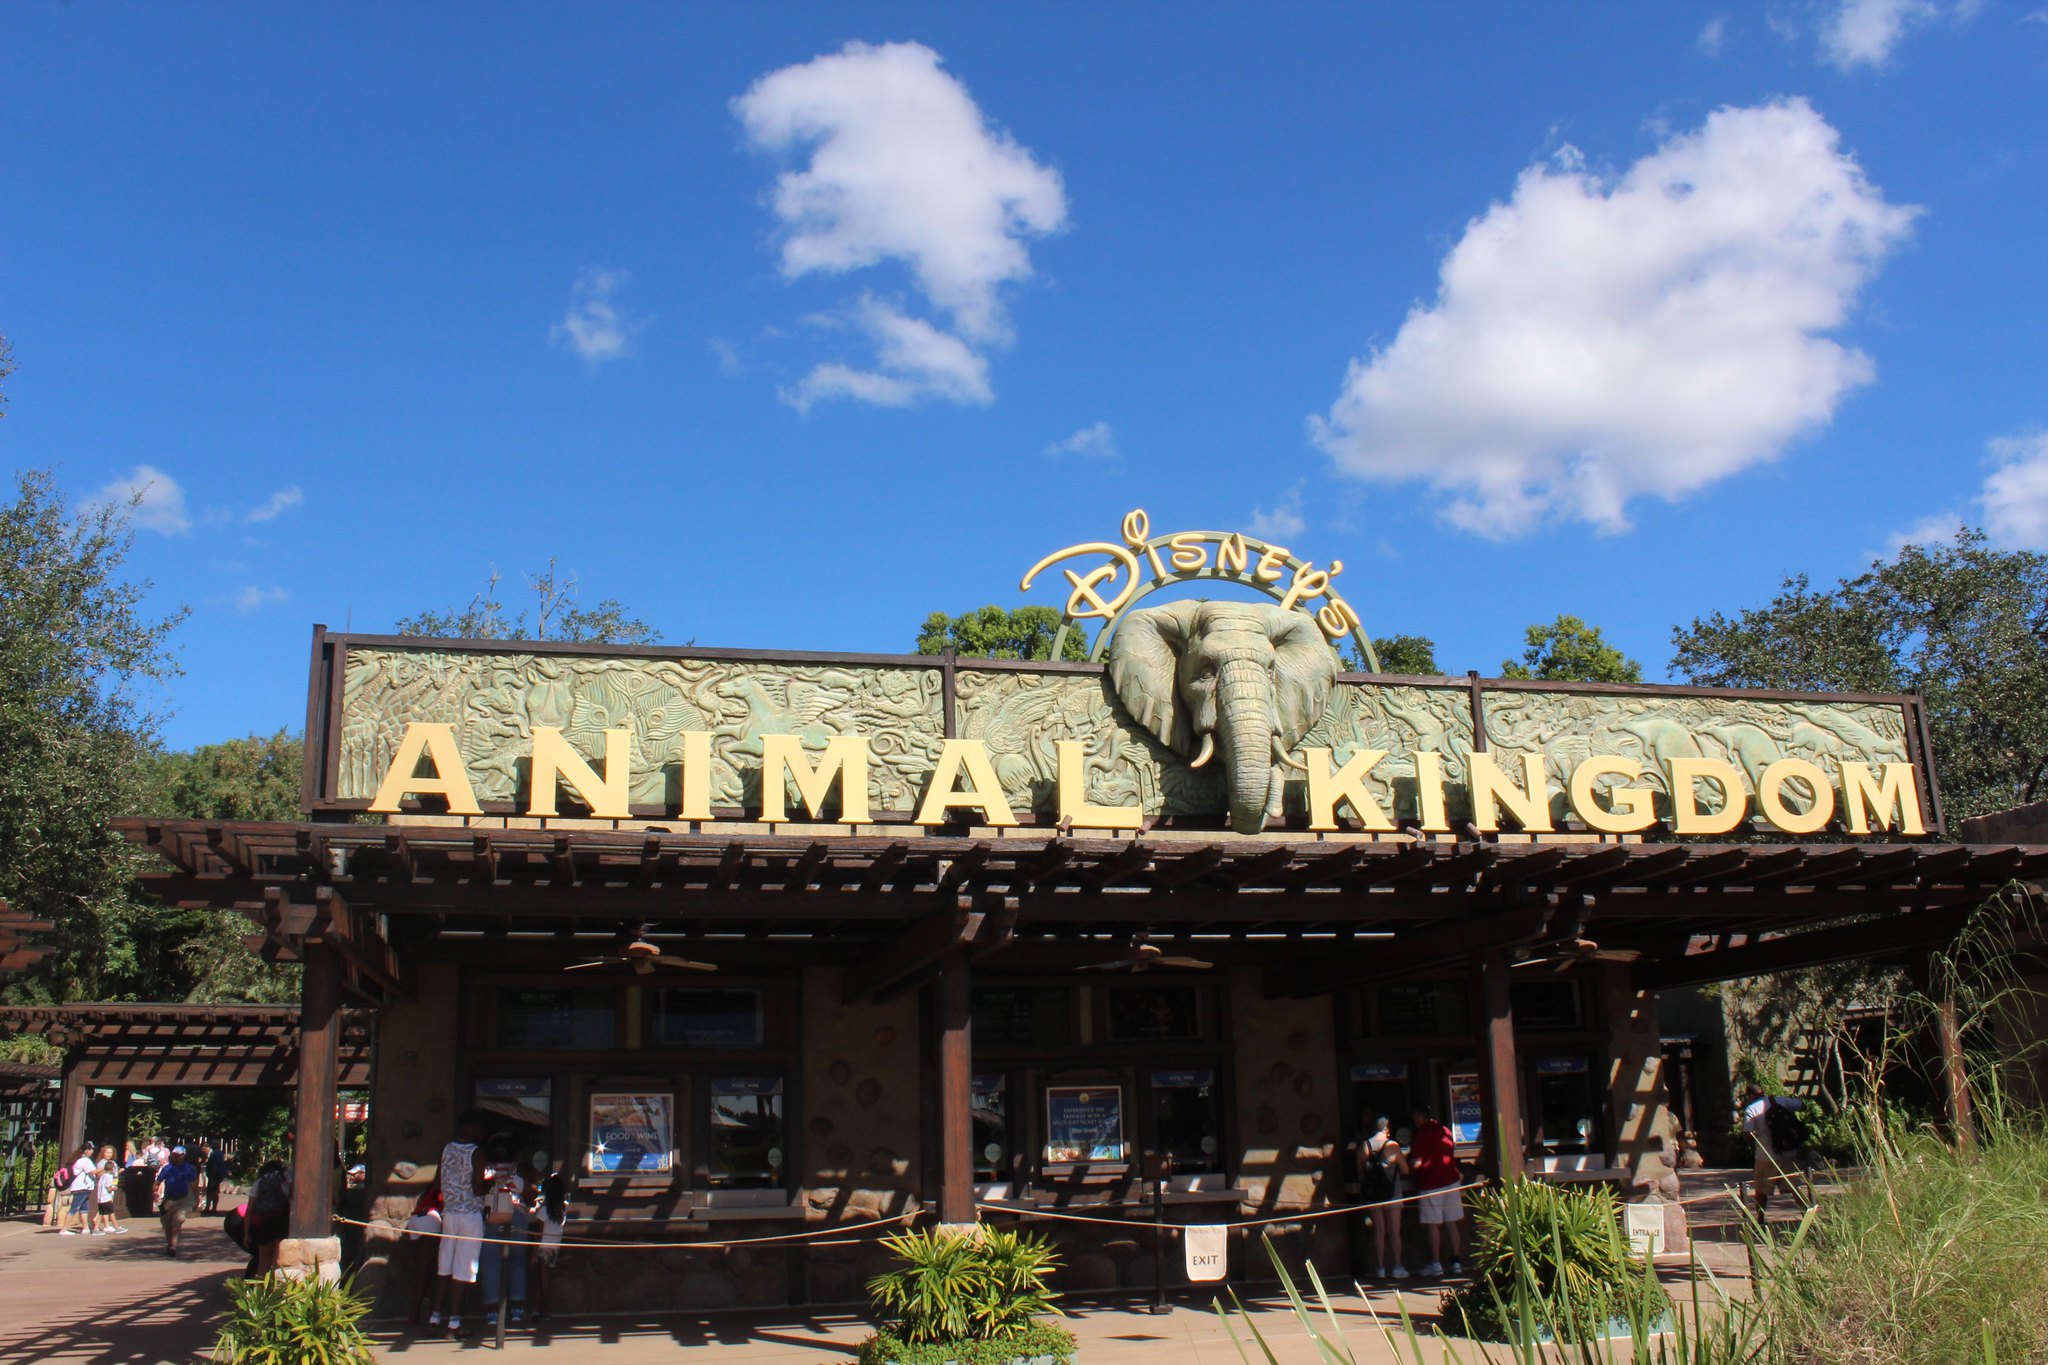 Animal Kingdom entrance